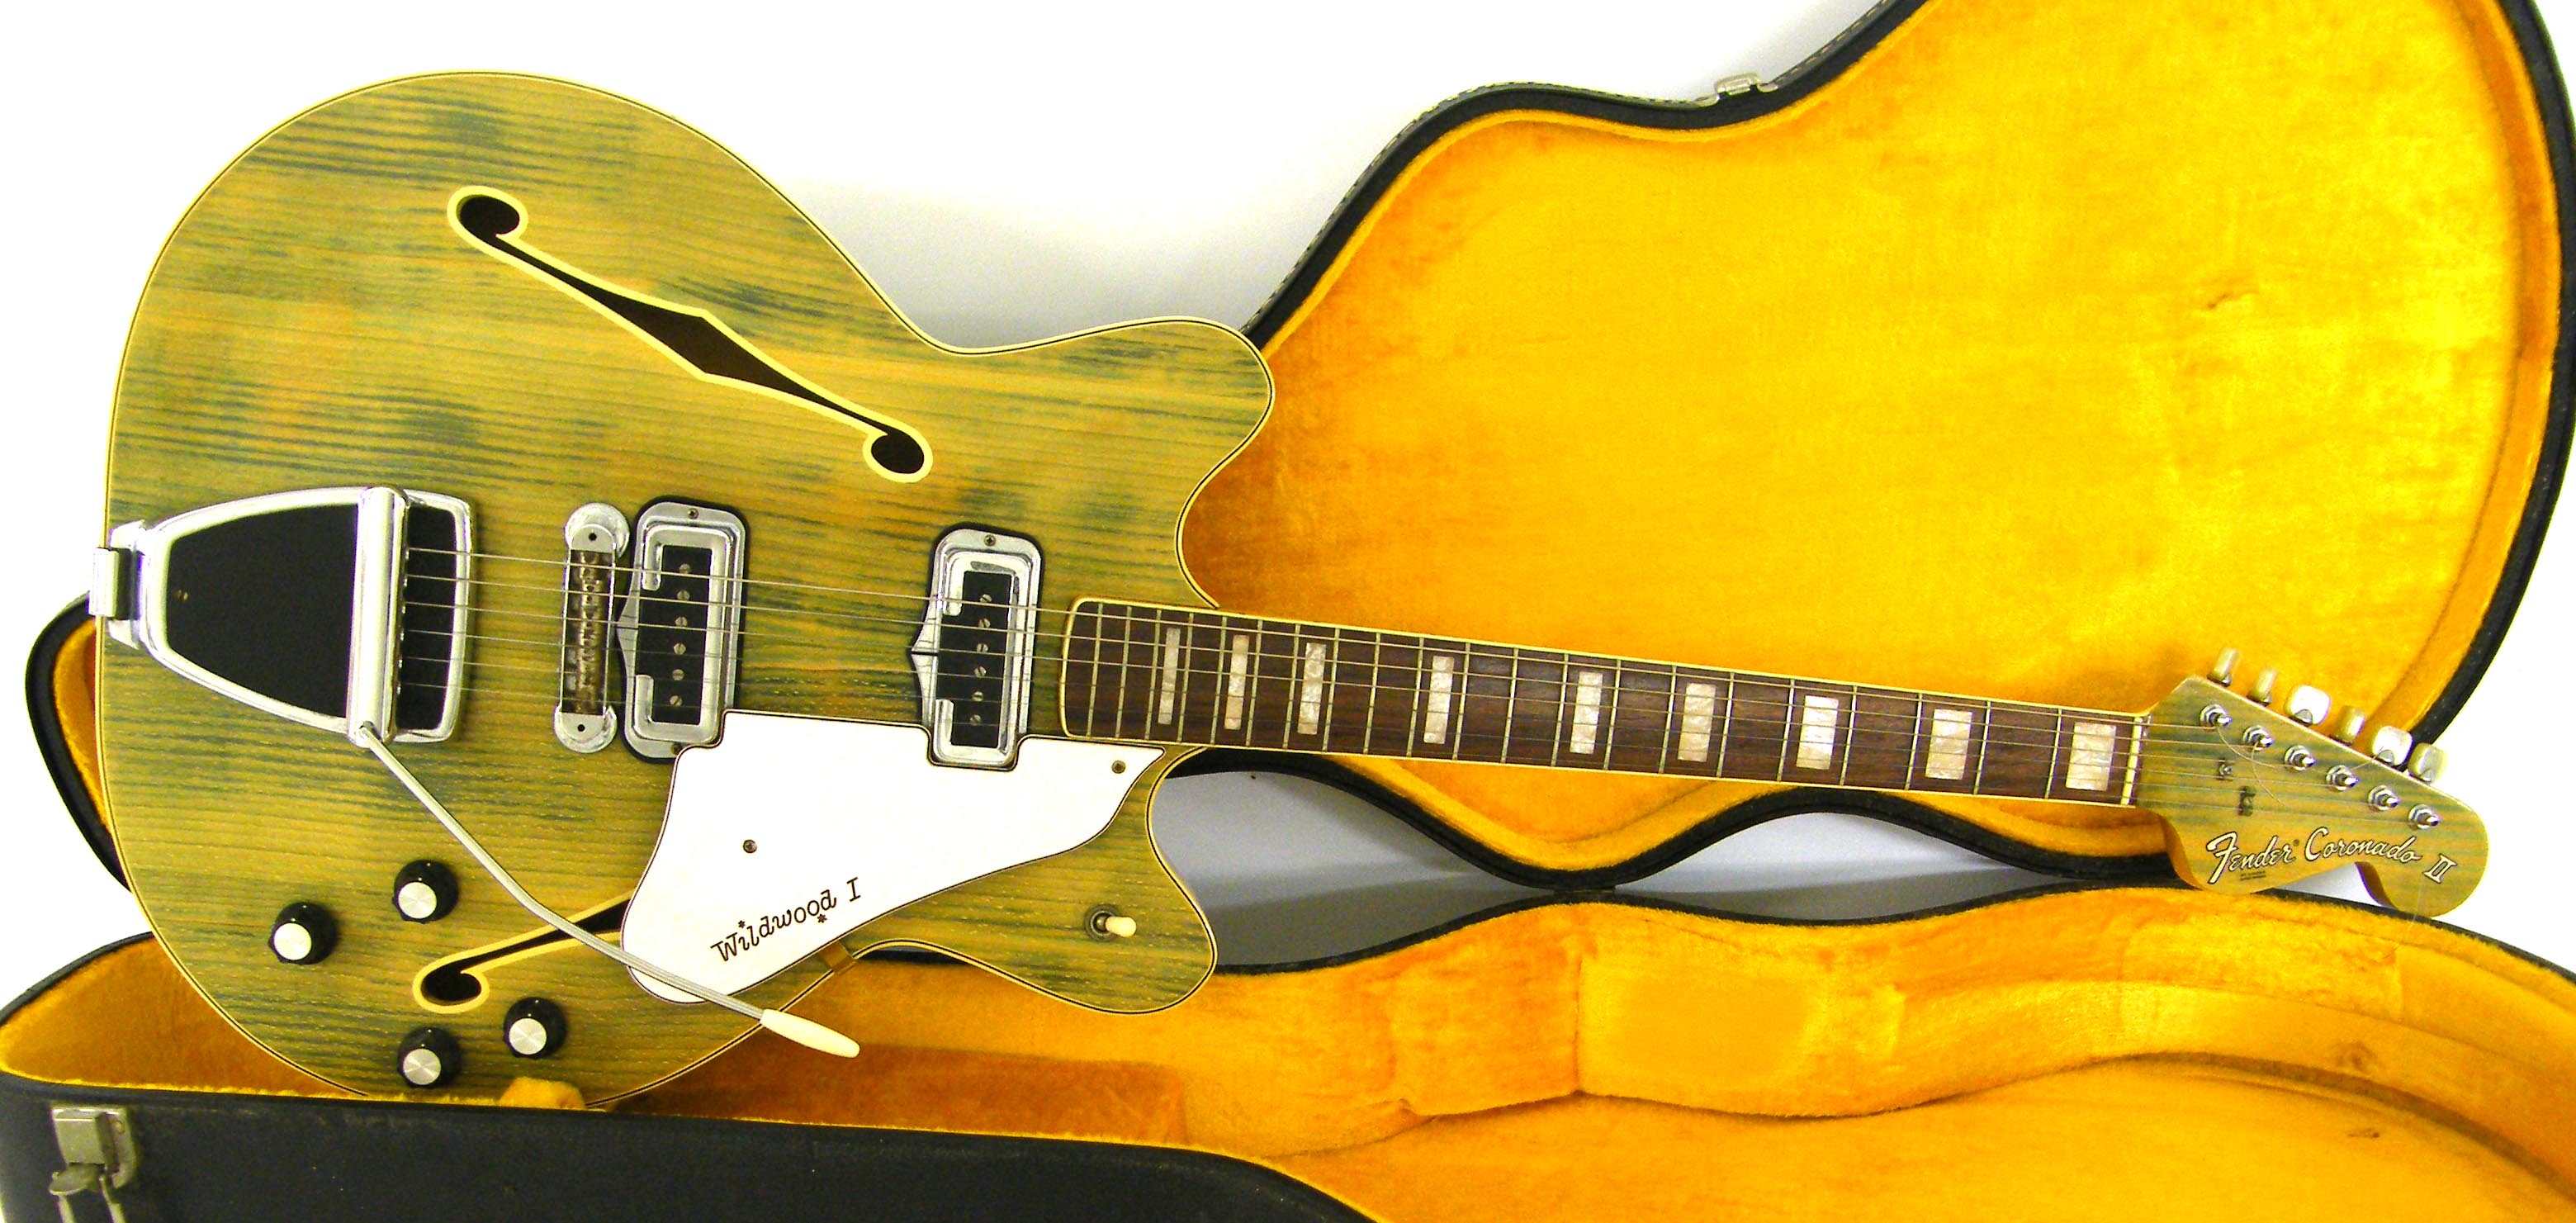 1967 Fender Coronado II Wildwood I hollow body electric guitar, made in USA, ser. no. 203957,